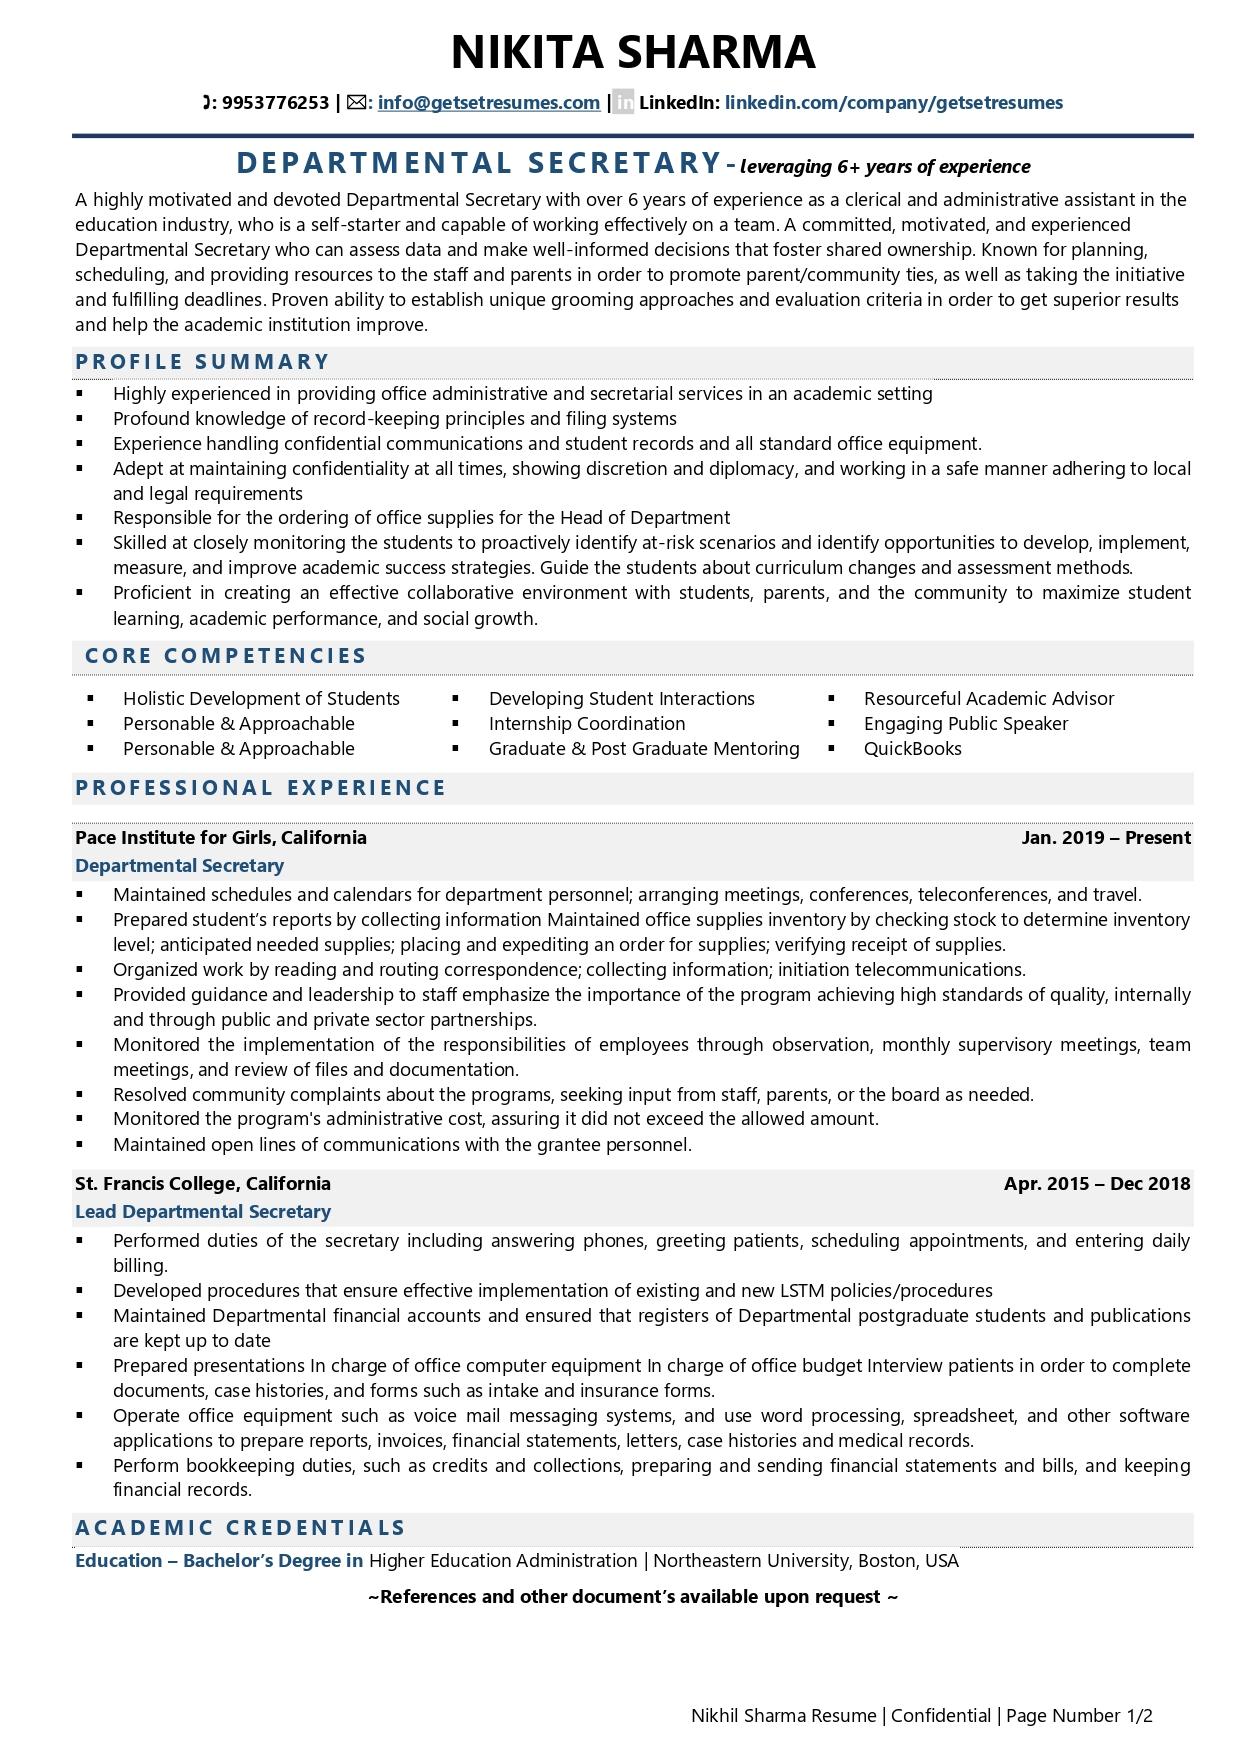 Departmental Secretary - Resume Example & Template